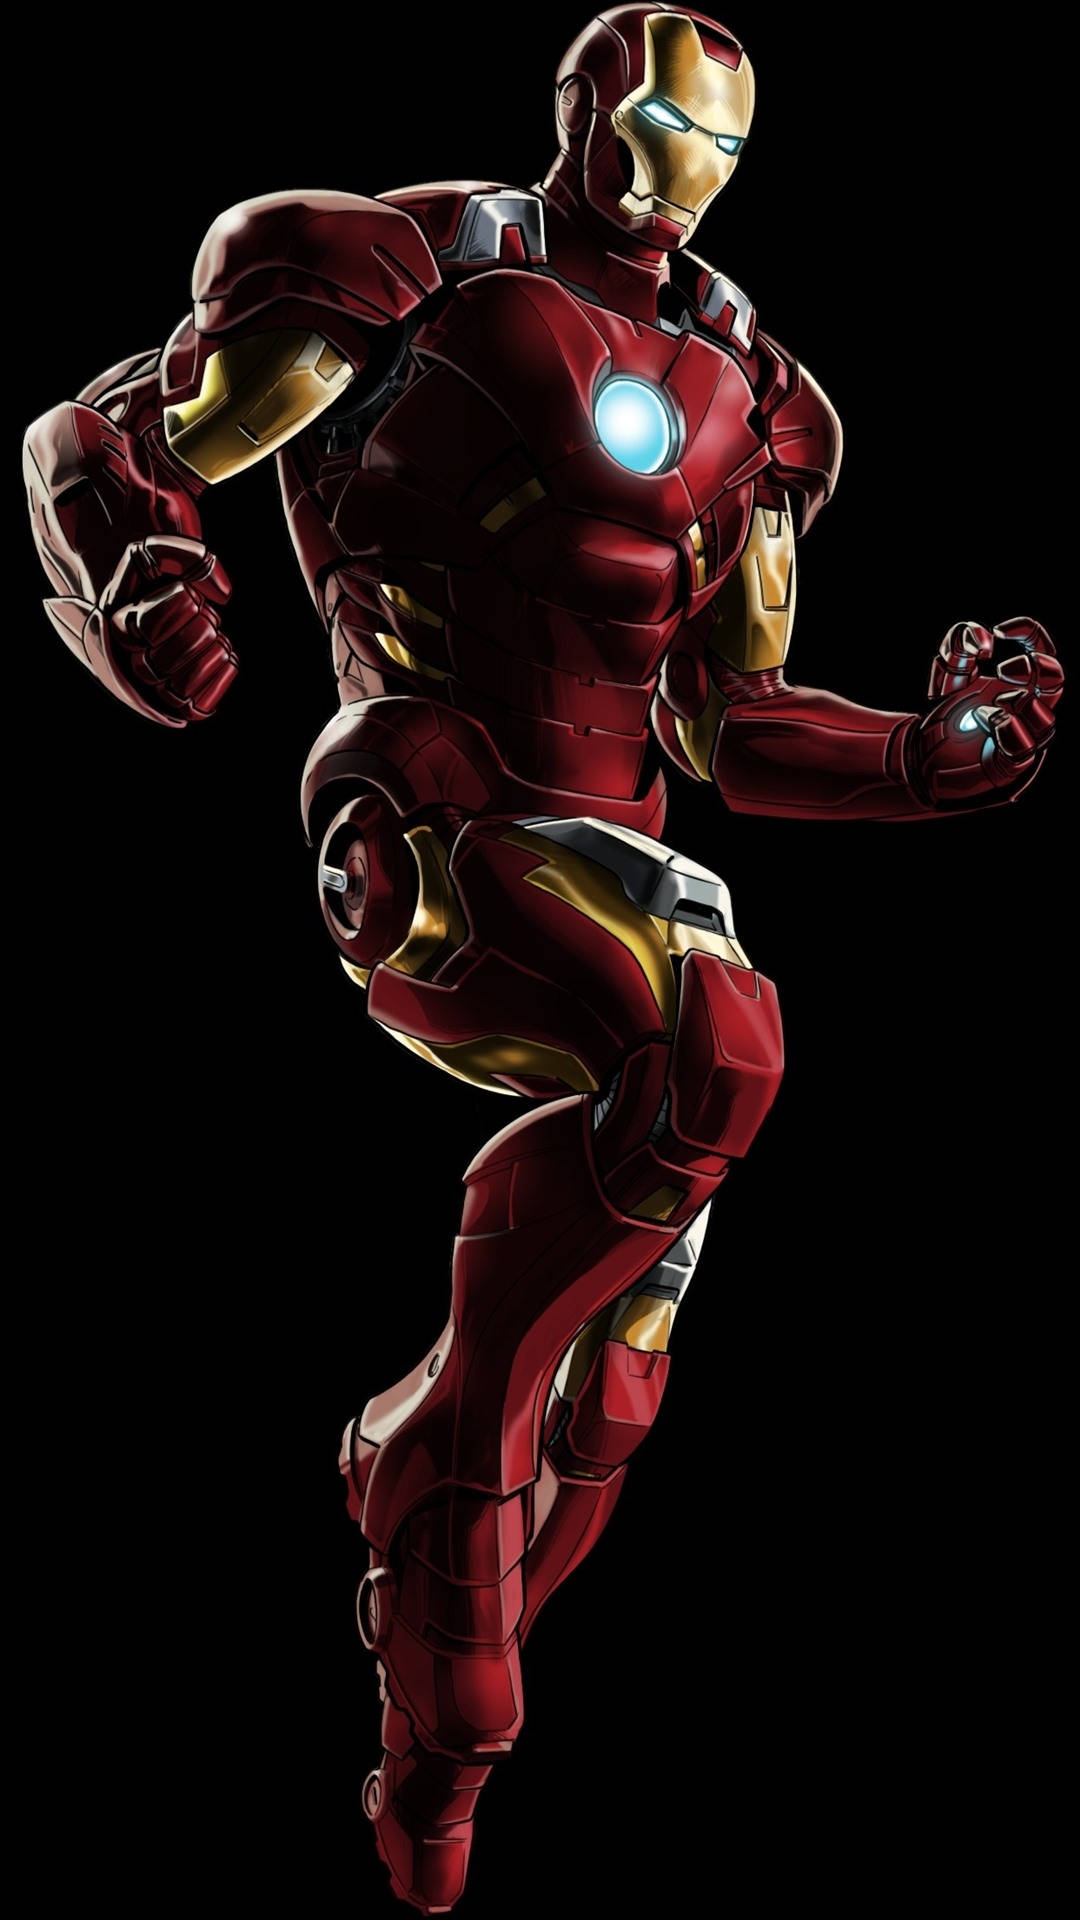 HD Black Background Iron Man Superhero Wallpaper